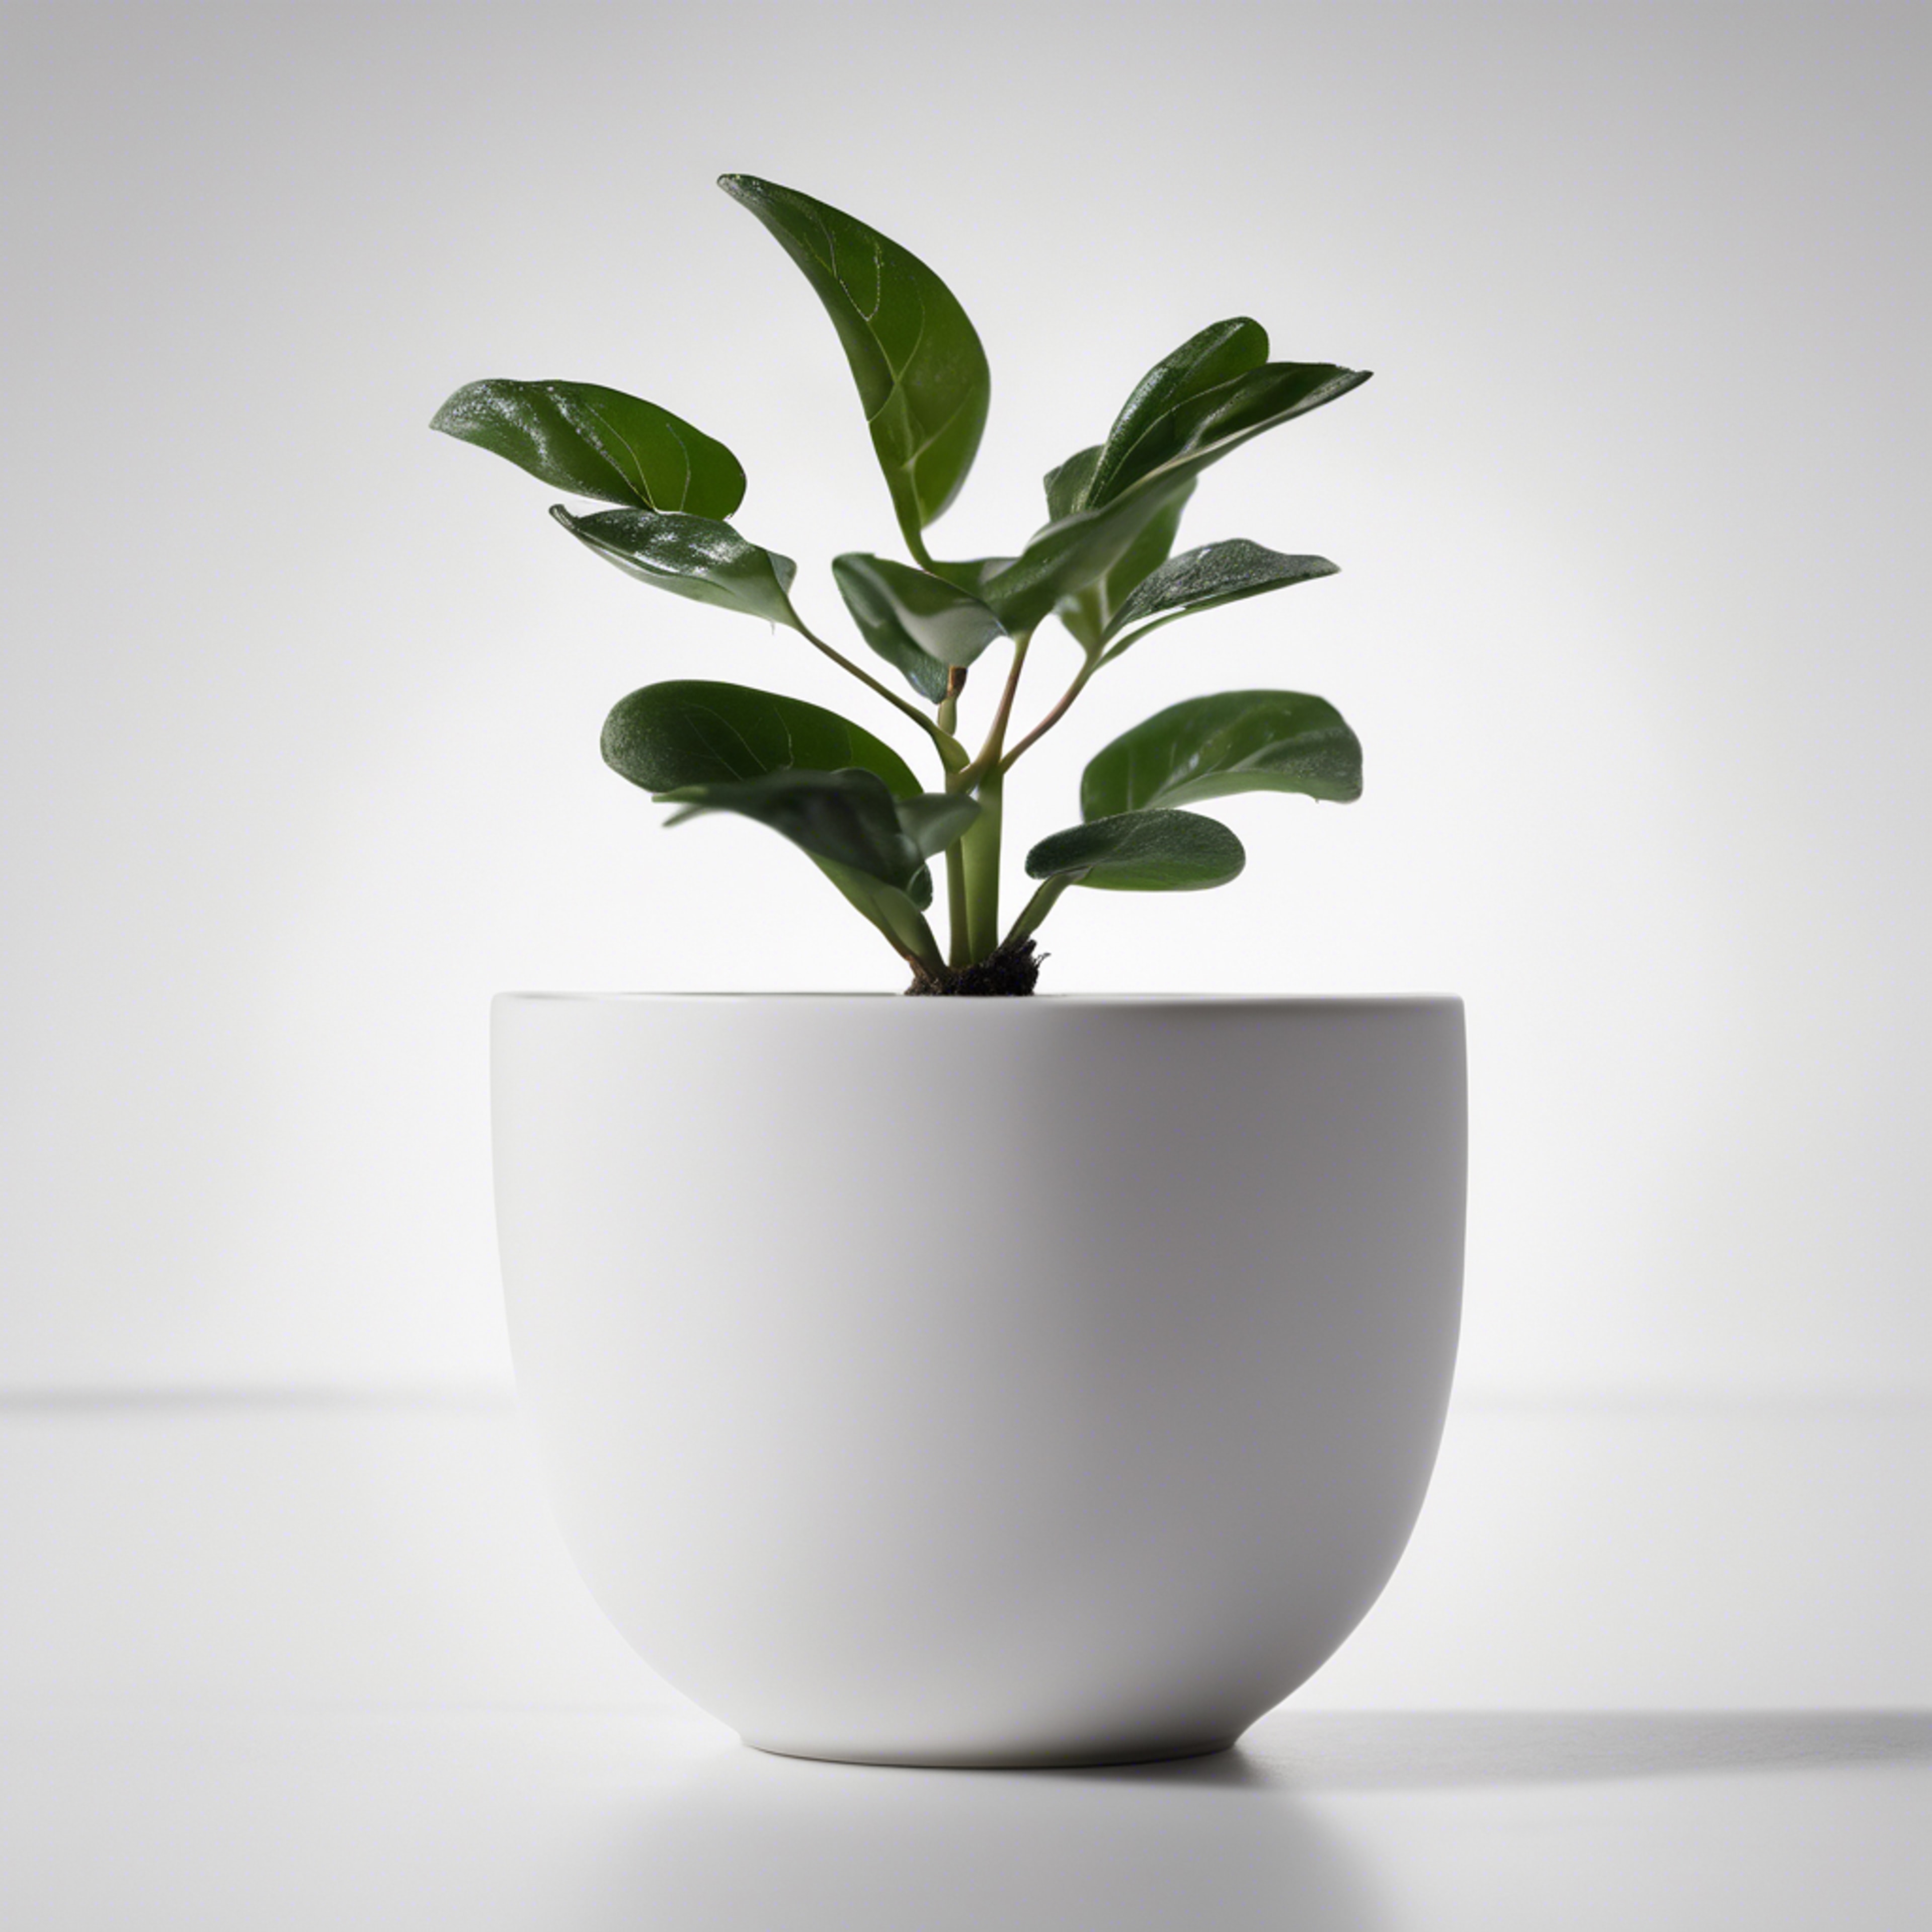 Small plant in a simple white ceramic pot against a minimalist white backdrop. Wallpaper[a9b2ed4c340742d2b1fd]